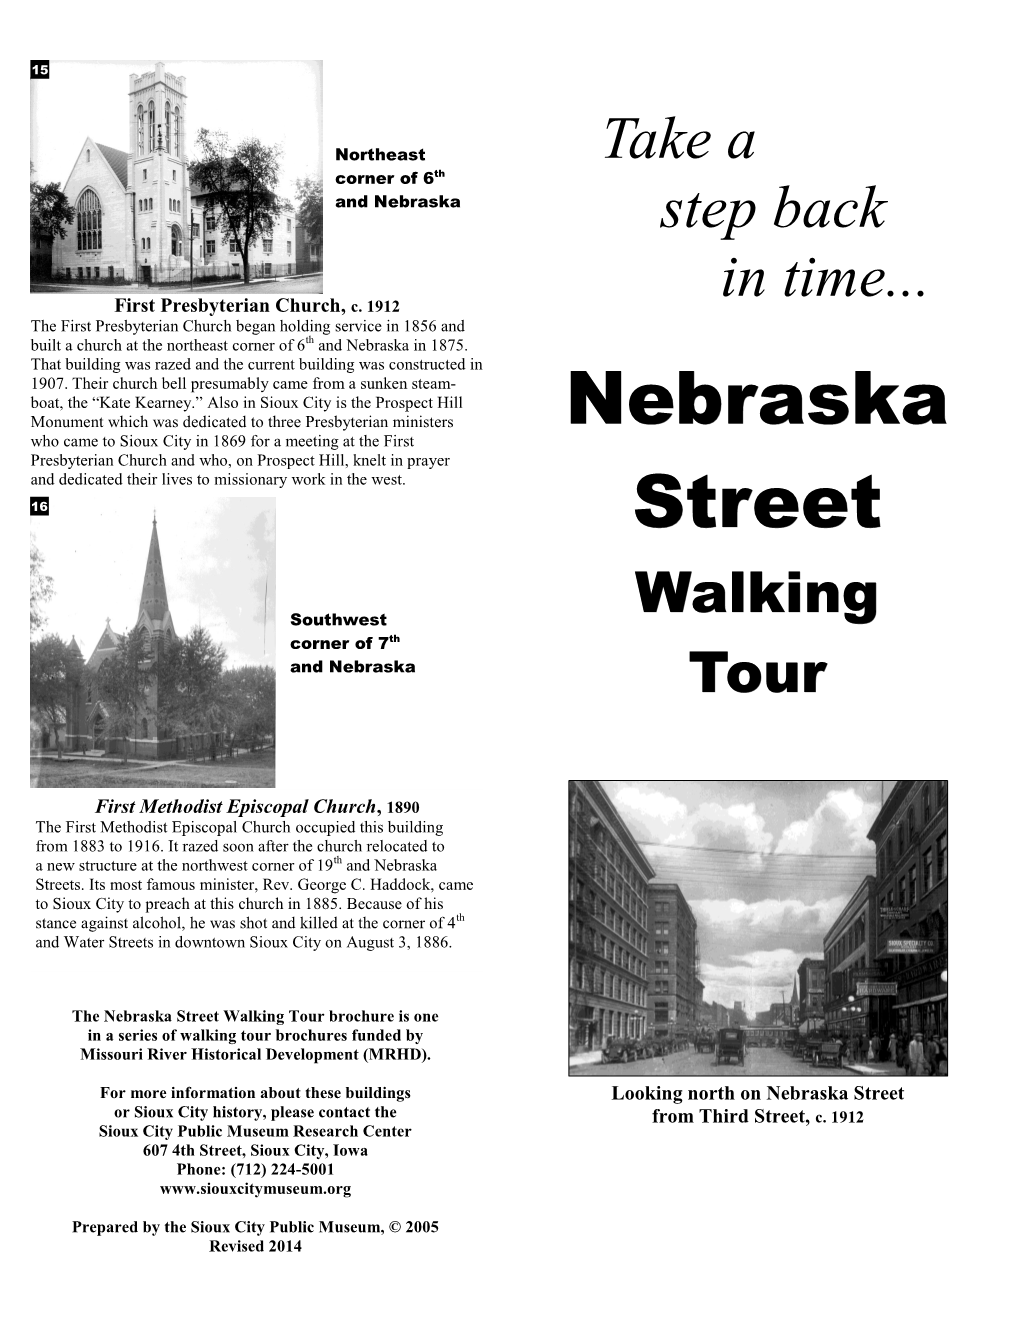 Nebraska Streets